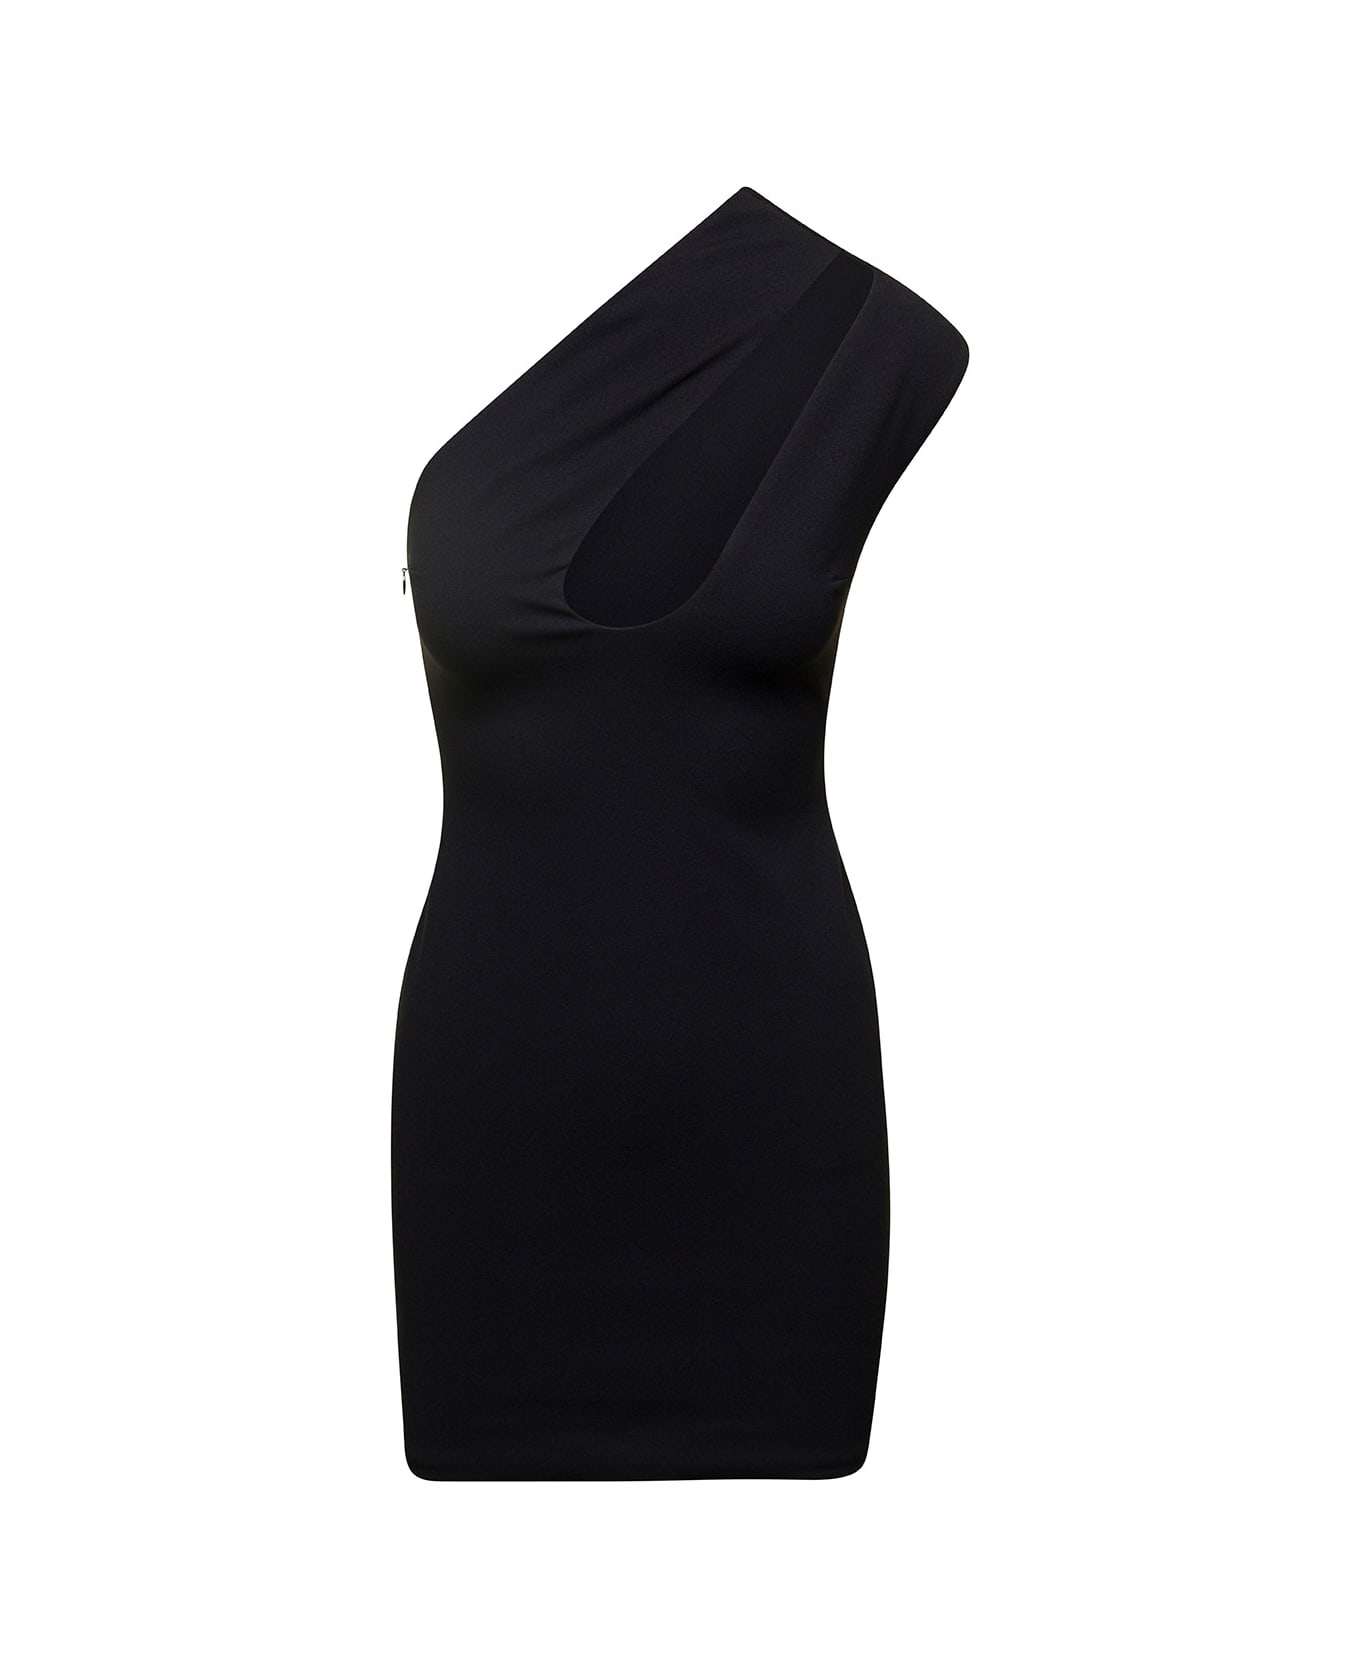 Solace London Black Alexa Cut-out Minidress In Crepe Knit Woman - Black